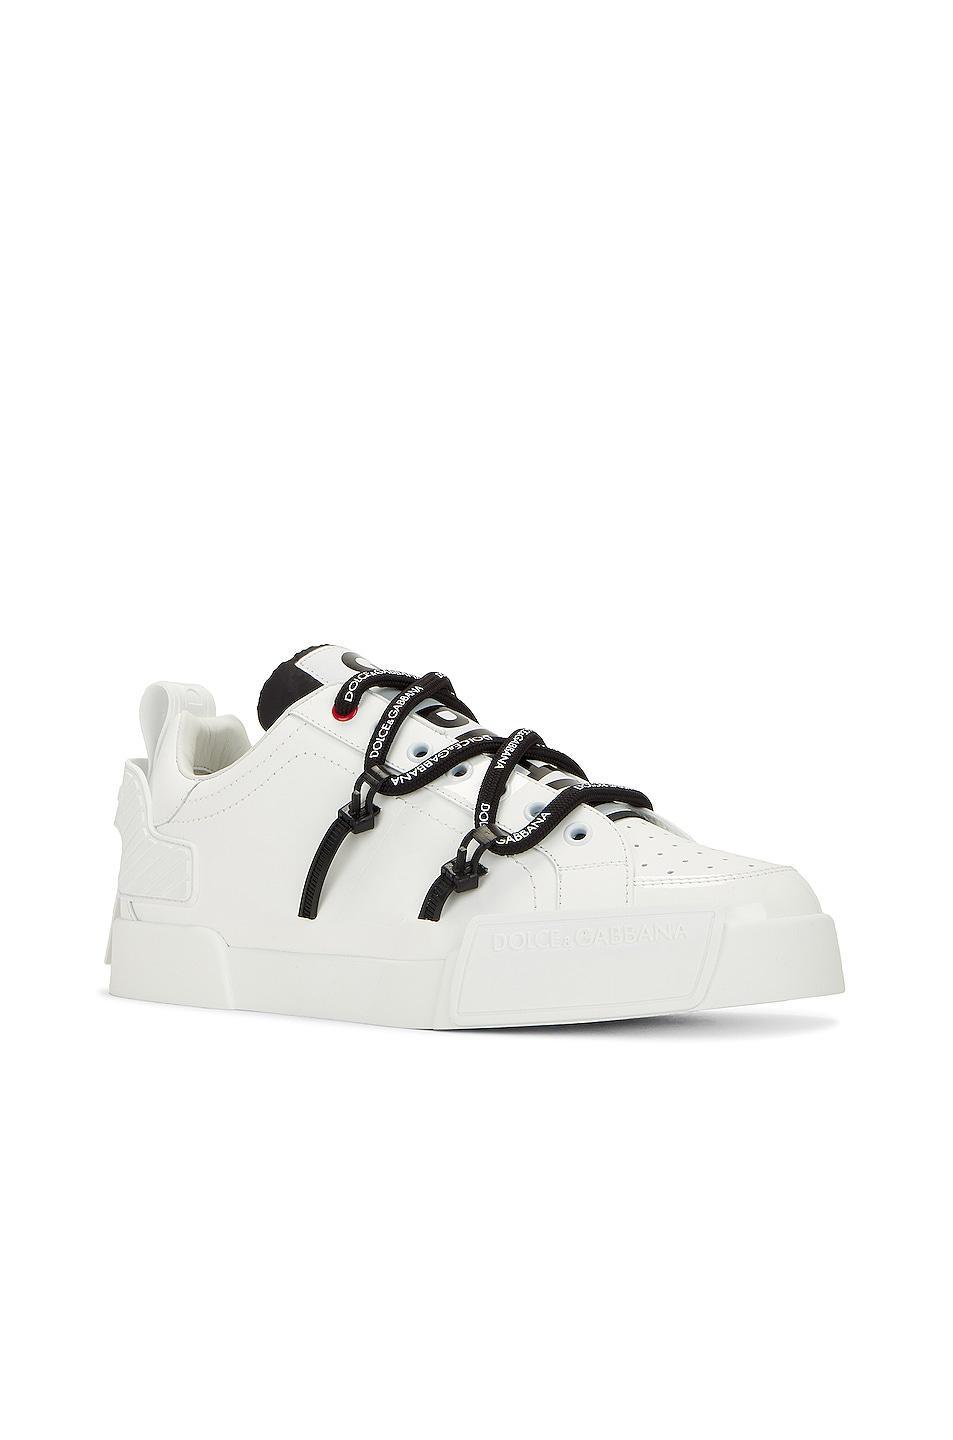 Dolce & Gabbana Sneaker Pelle in White Product Image